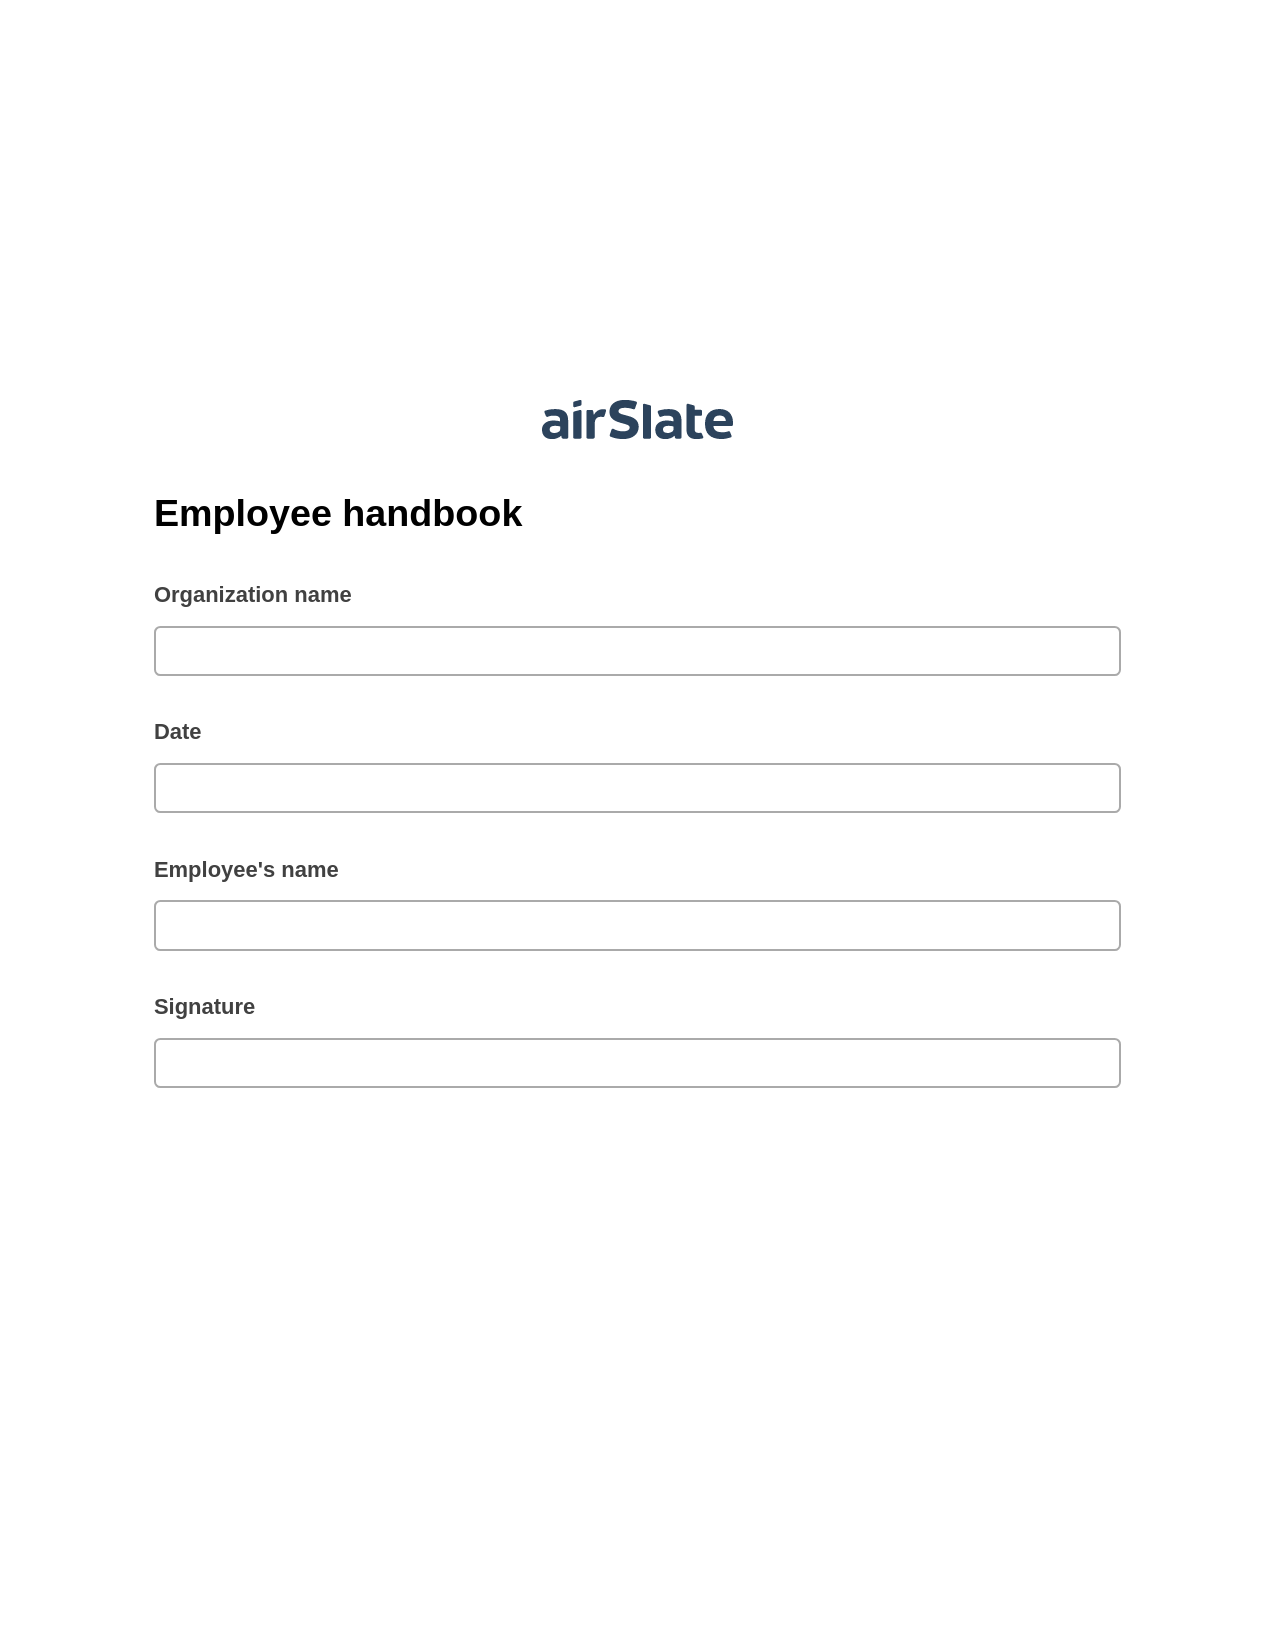 Employee handbook Pre-fill from CSV File Bot, Remove Slate Bot, OneDrive Bot